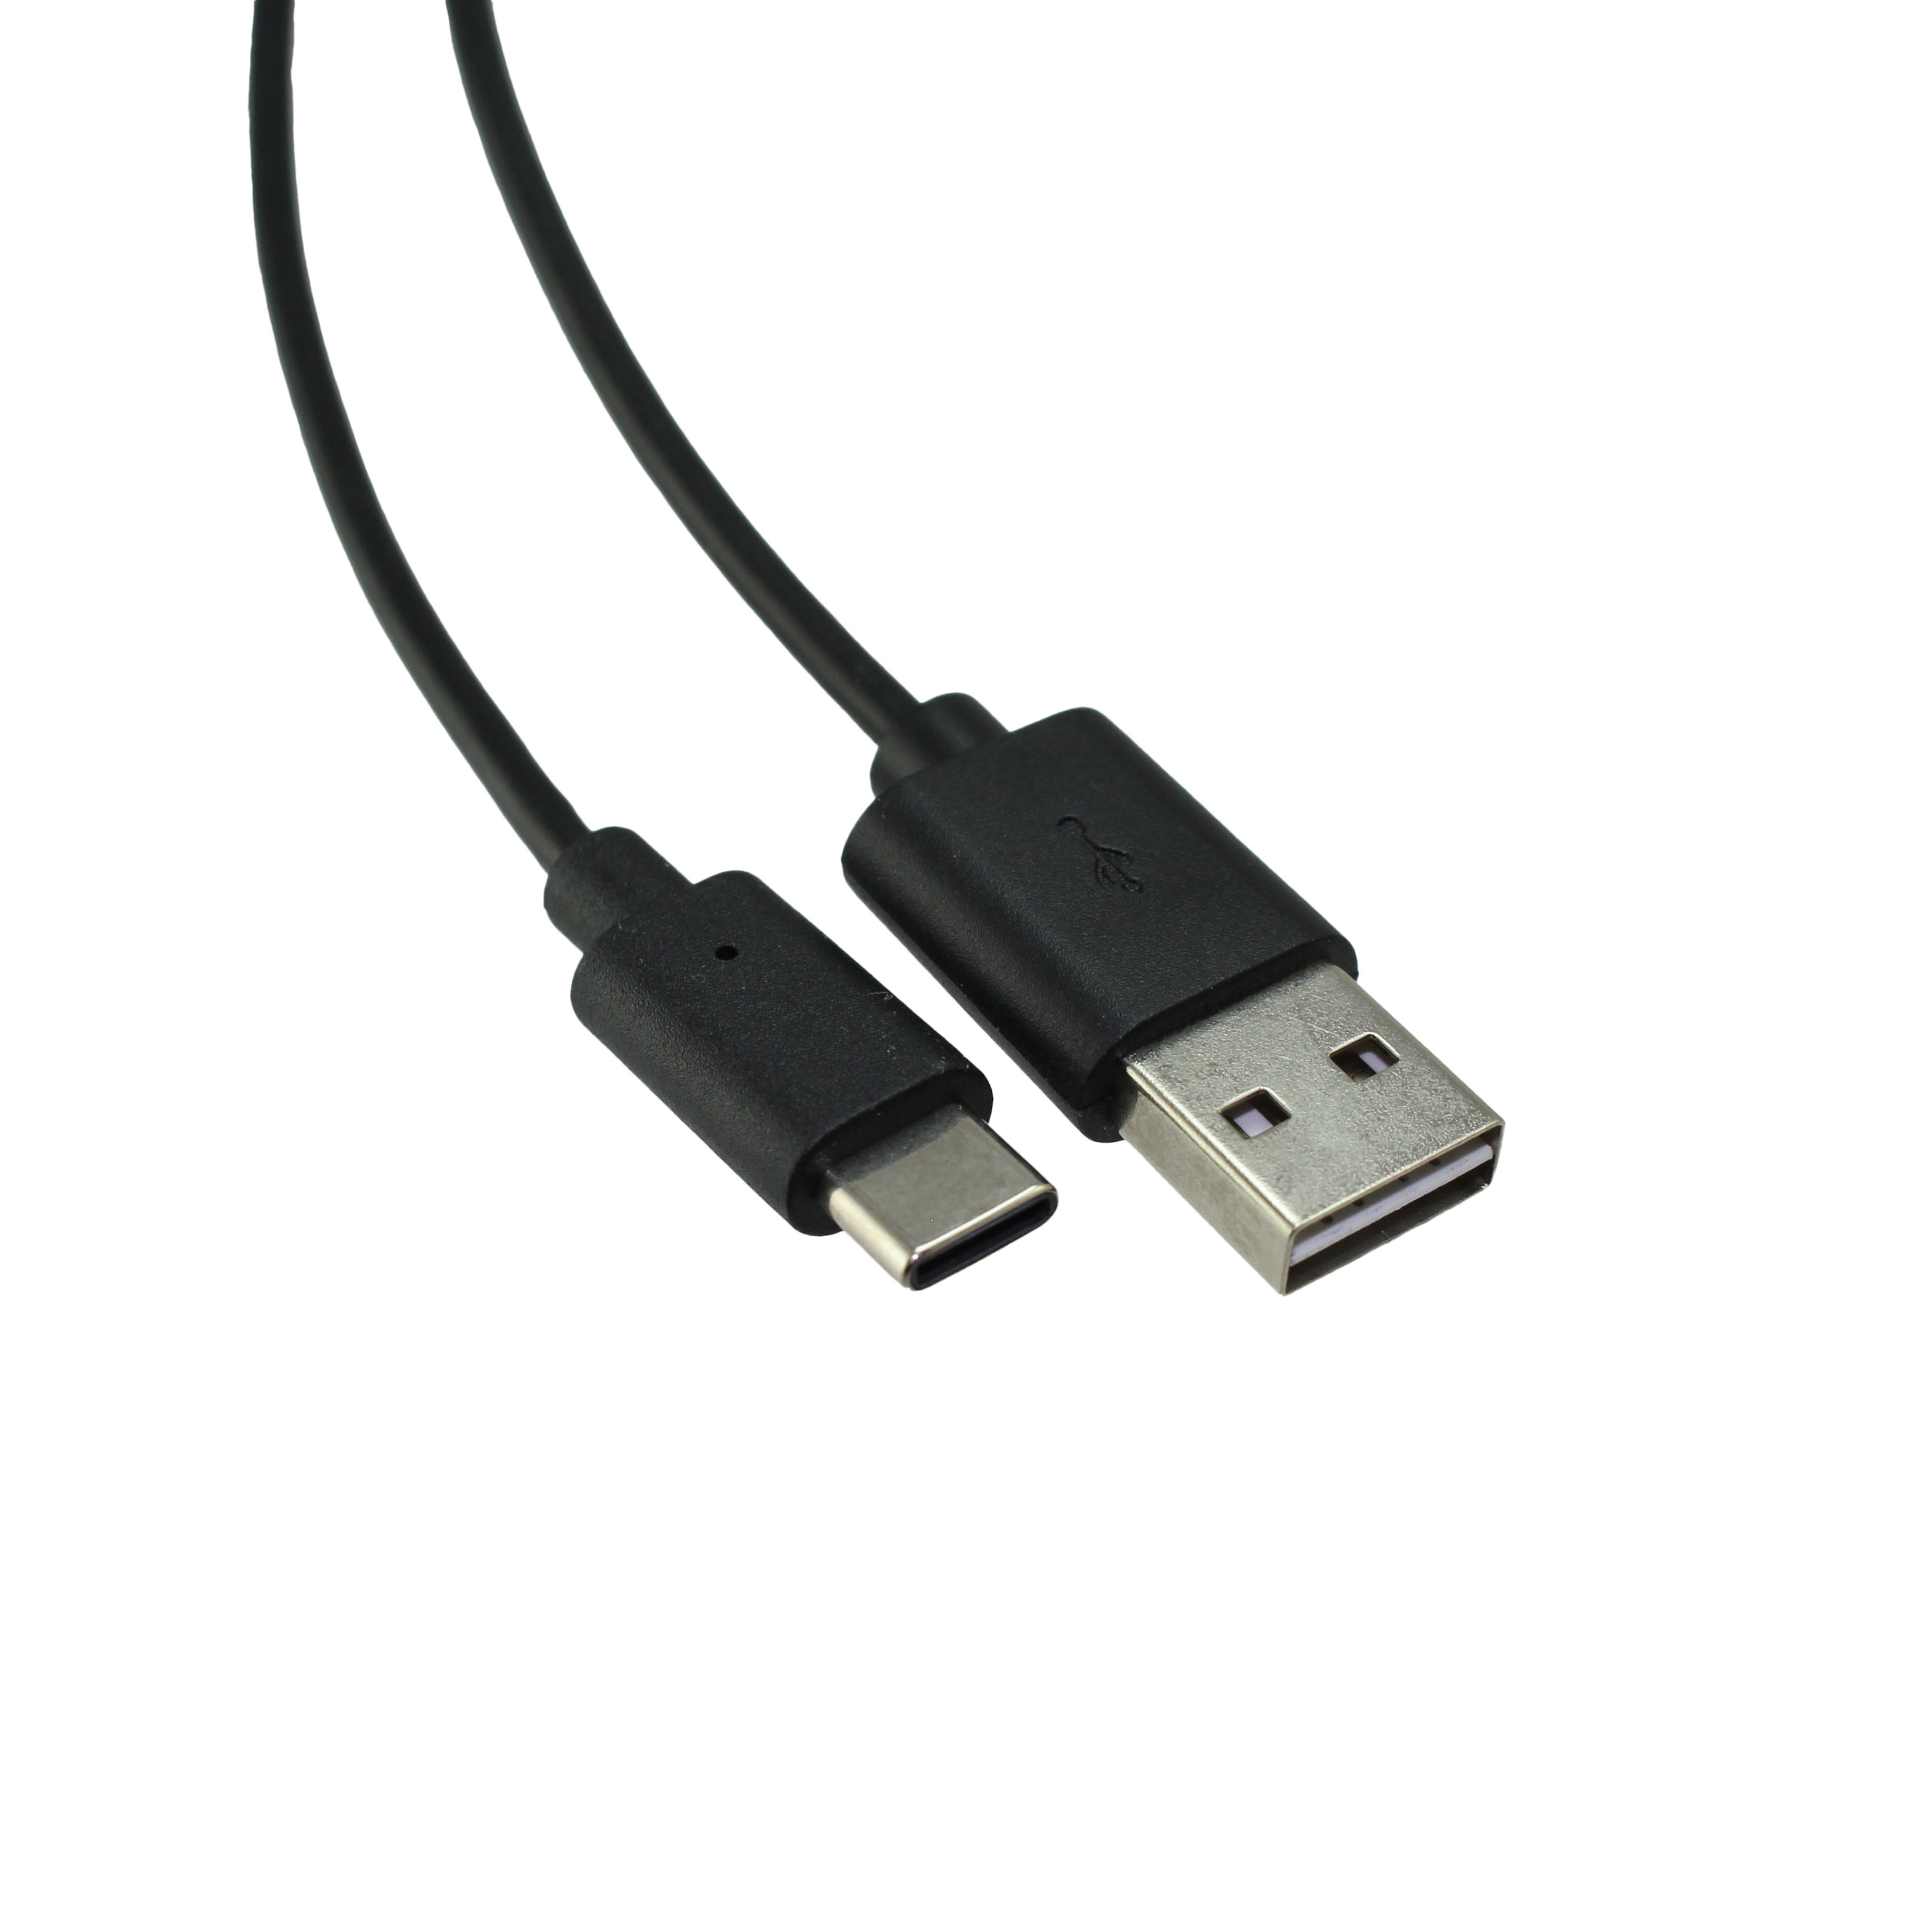 【CAB-15424】CBL USB2.0 A PLUG TO C PLG 6.56'